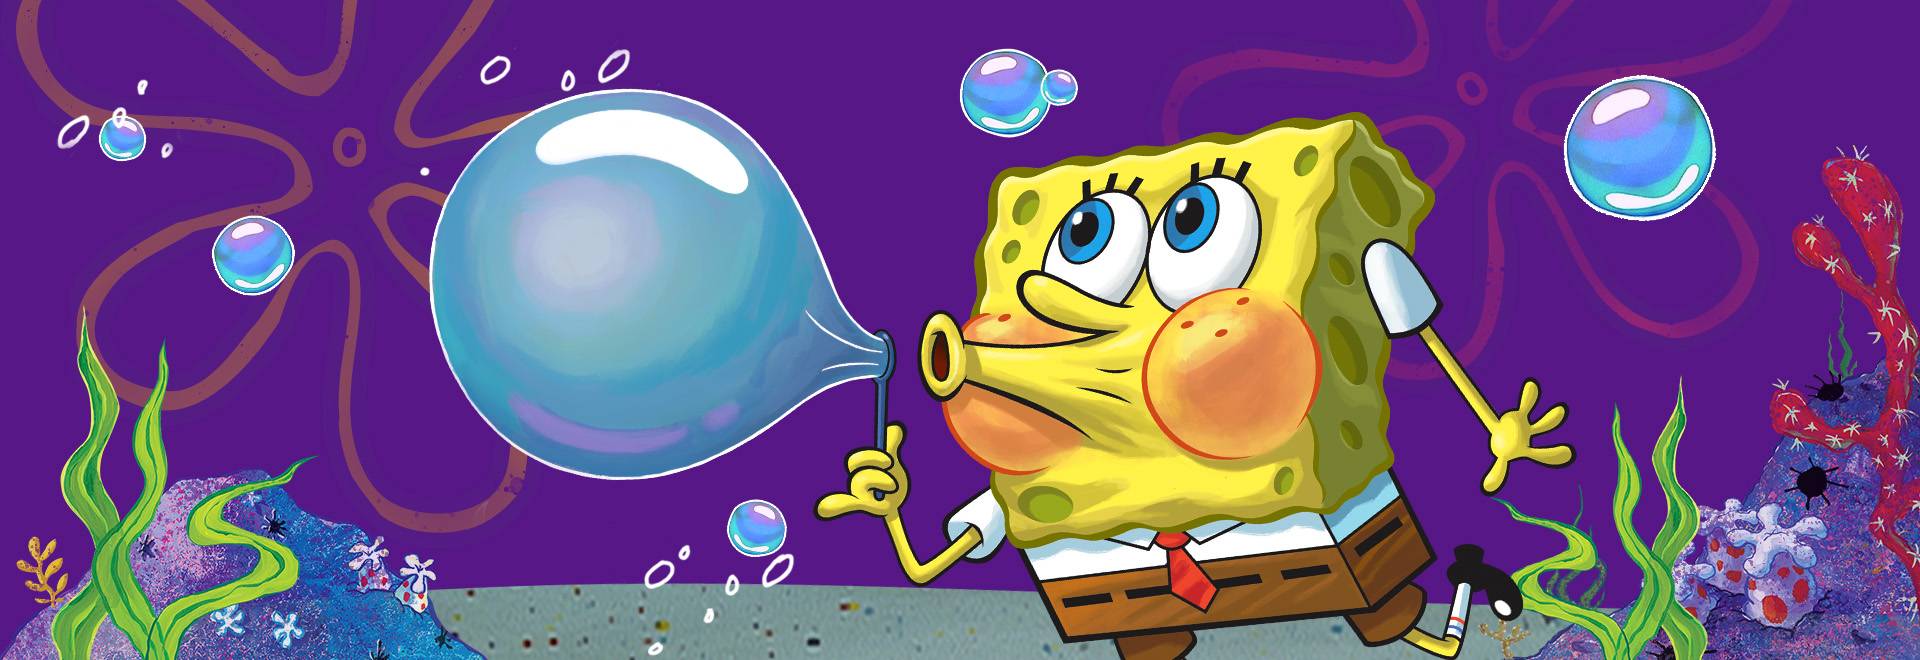 Spongebob Squarepants's Top 10 Scariest Moments, News